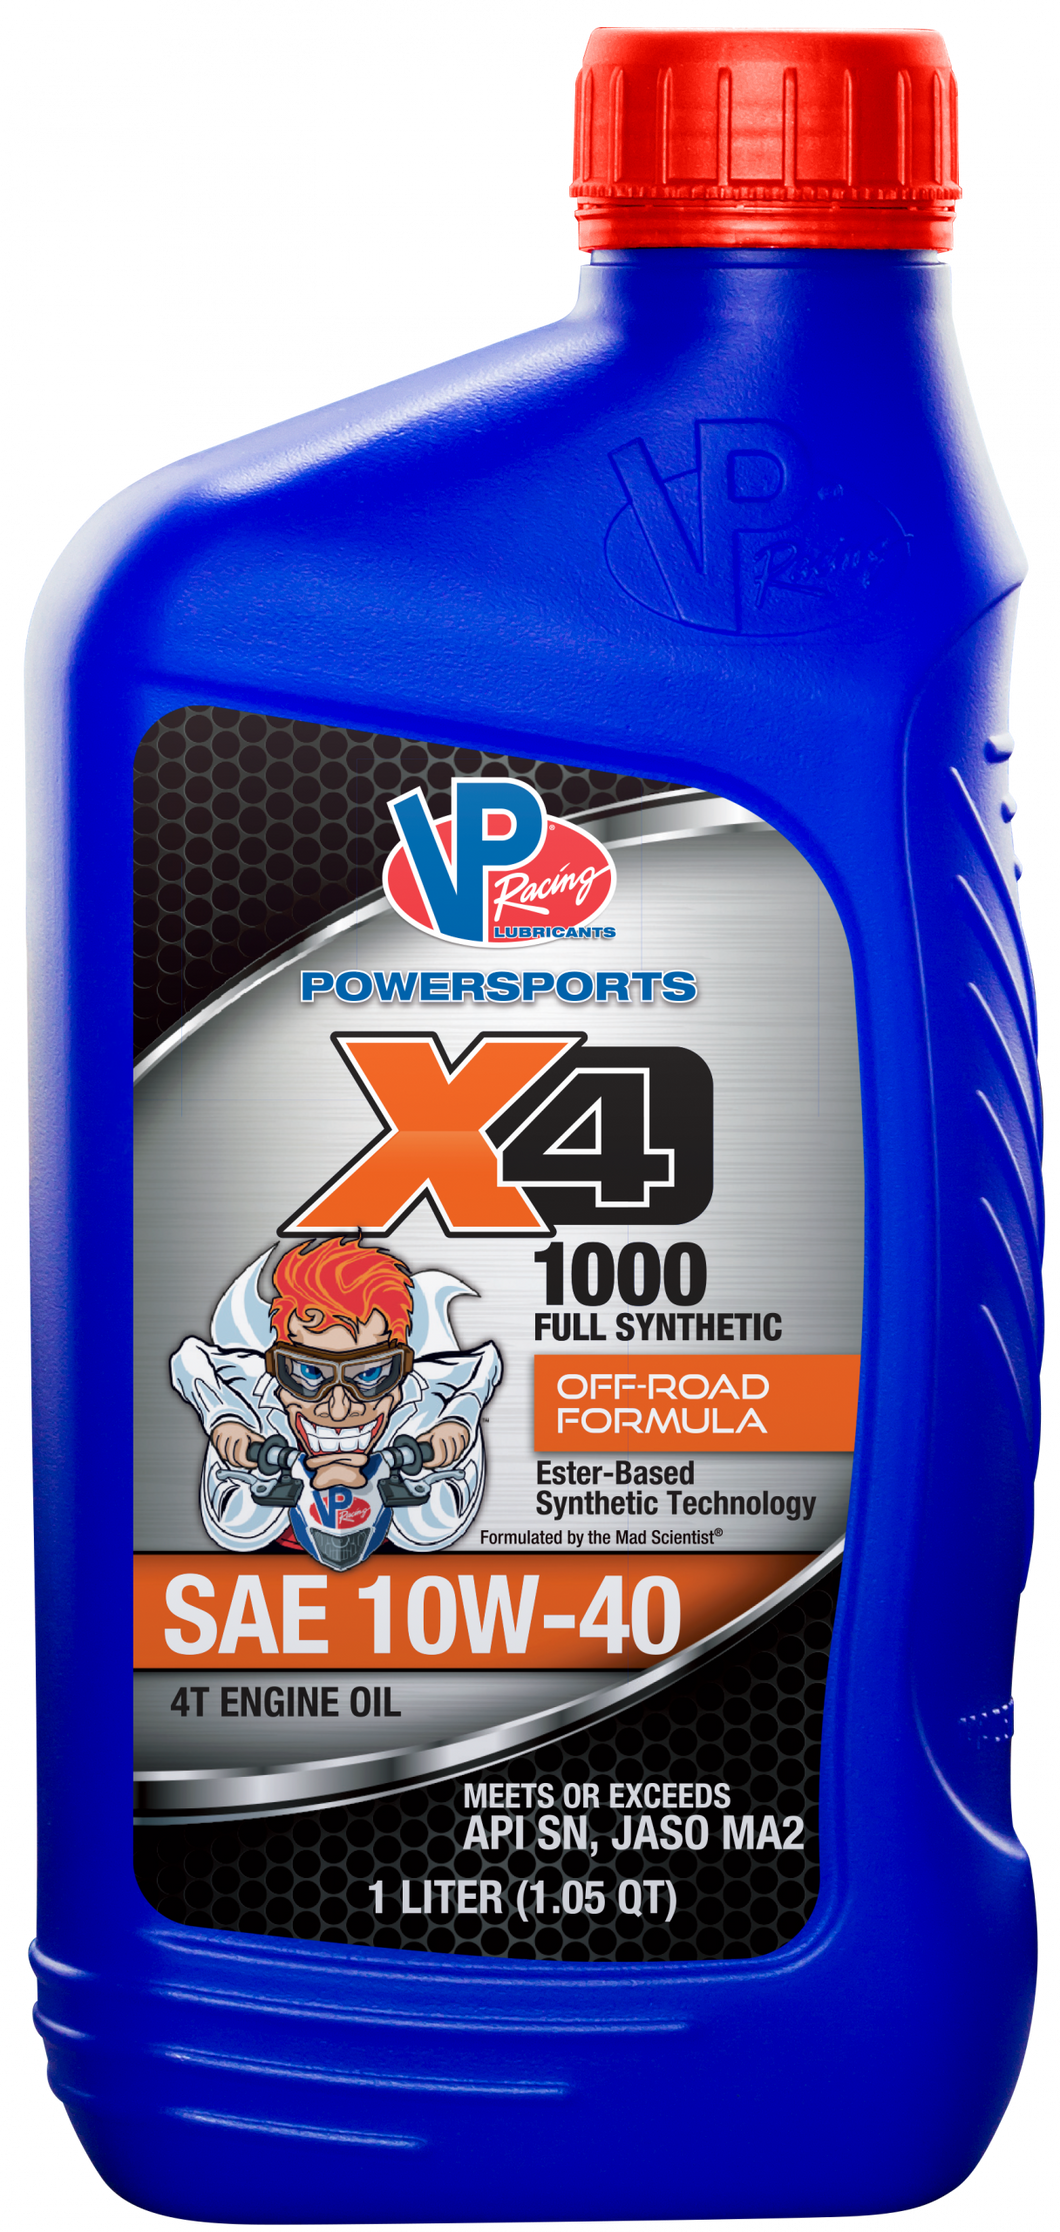 VP Racing X4-1000 10W-40 Synthetic Oil 1 liter / 1.05qt